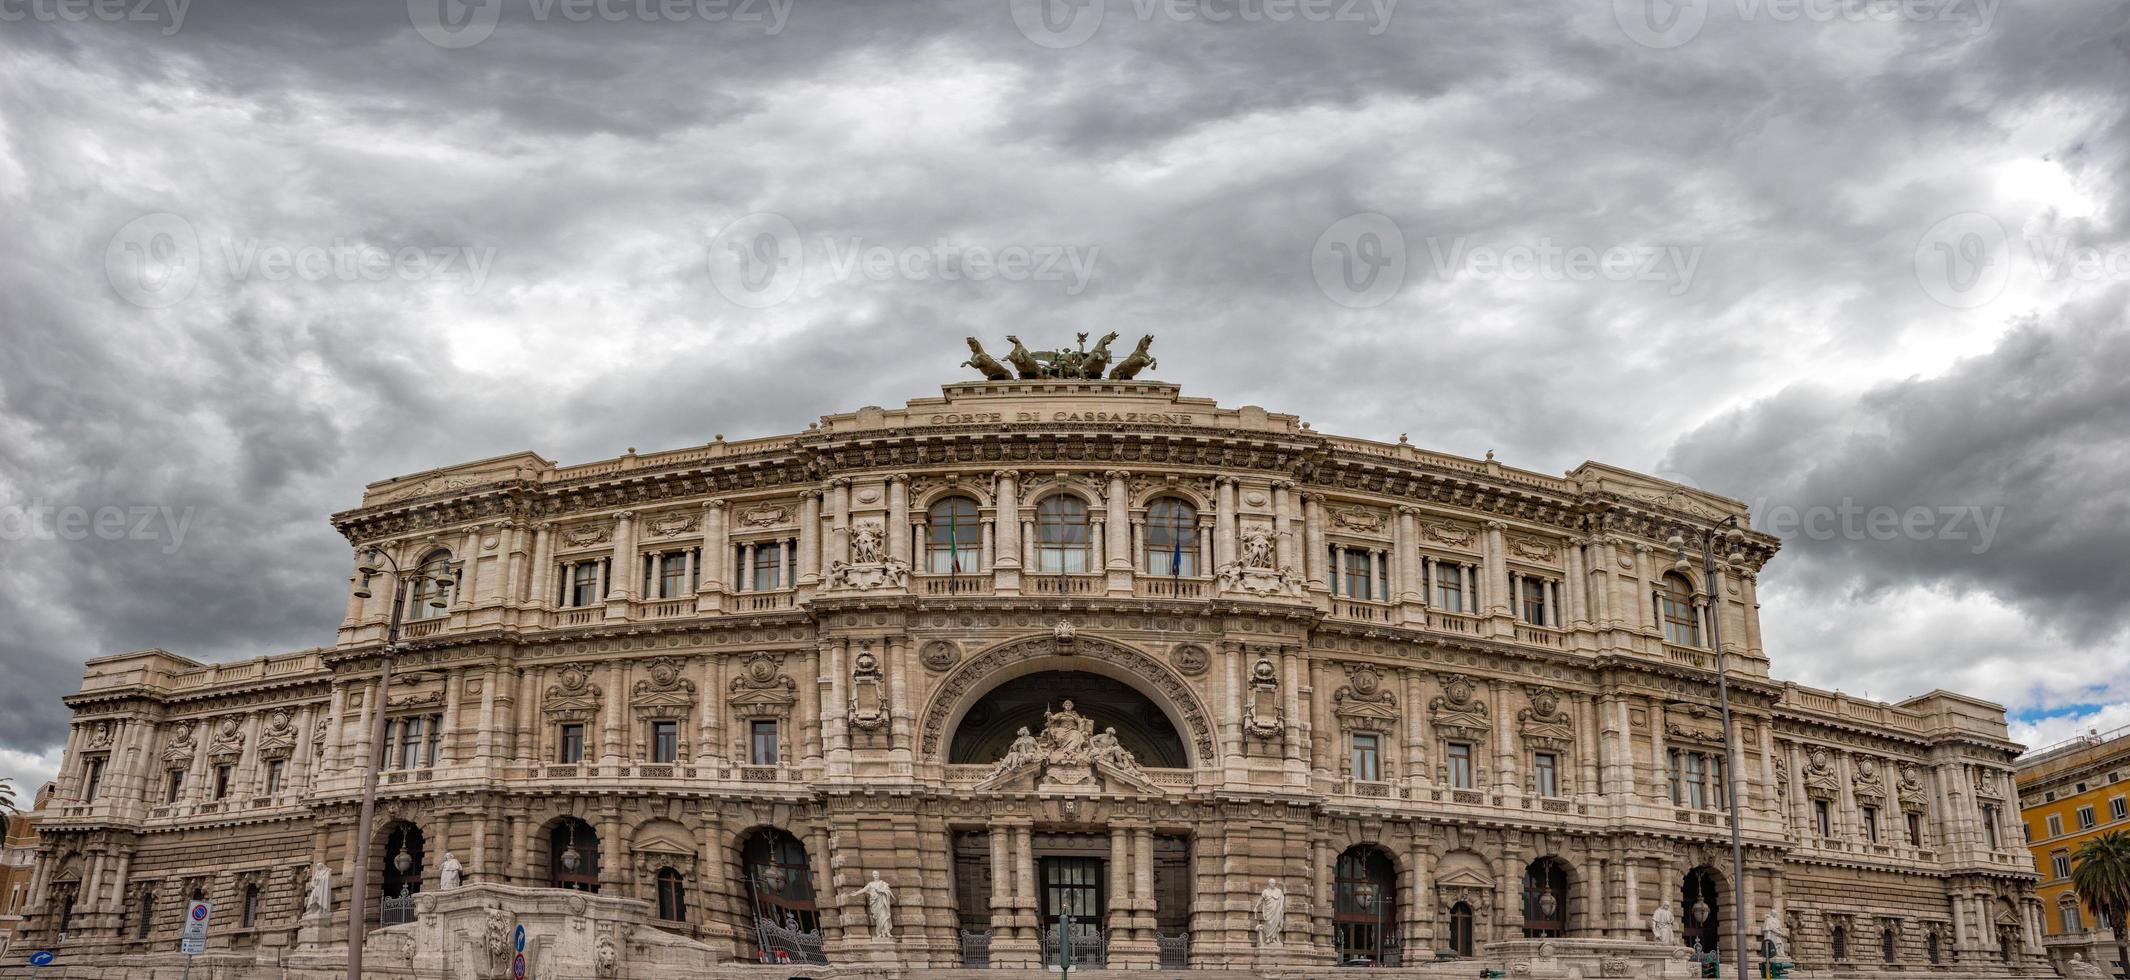 Rome corte di cassazione palace view on cloudy day photo